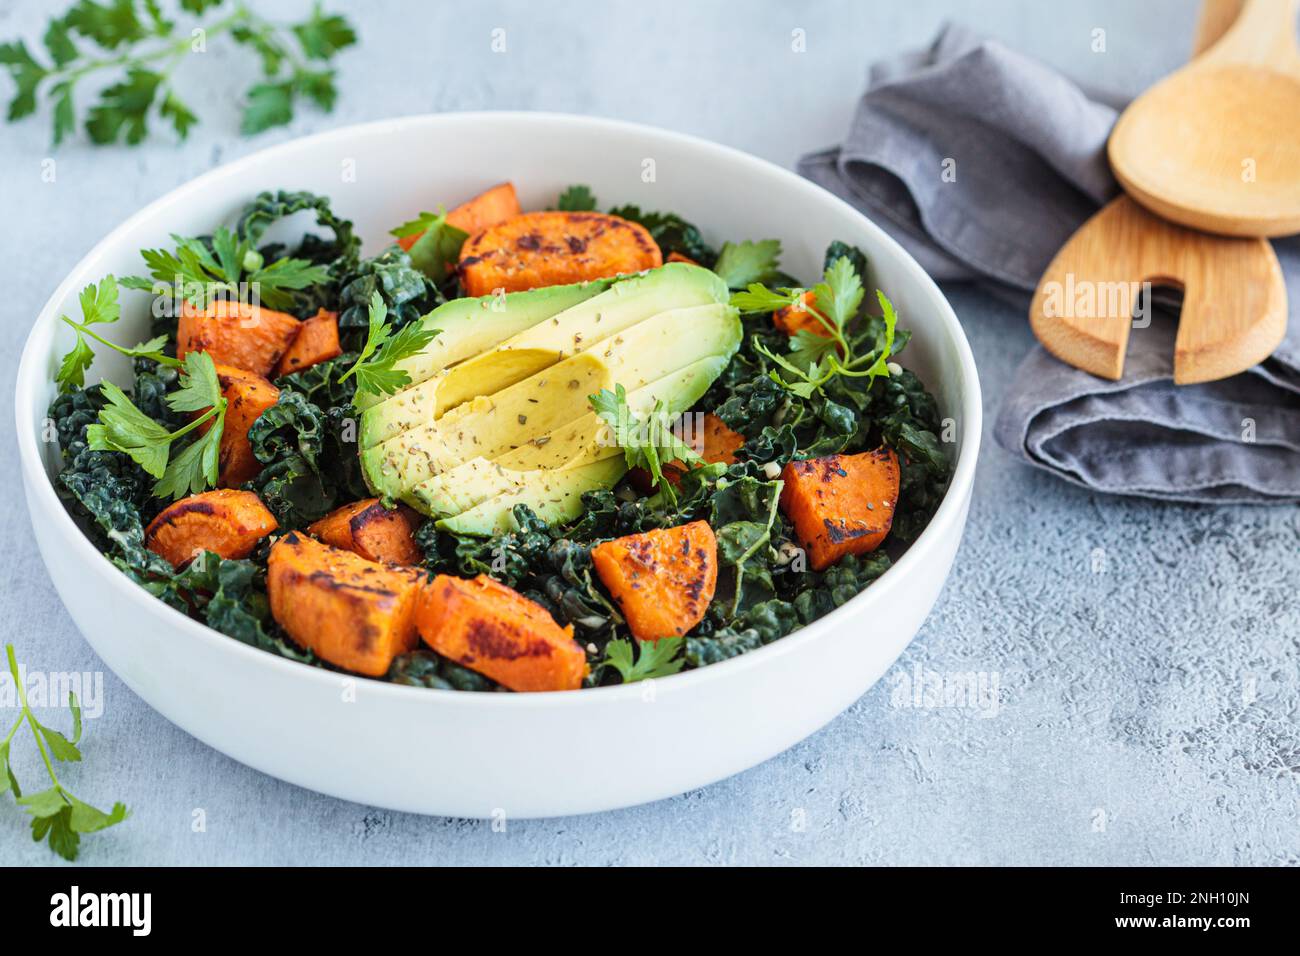 Roasted sweet potato, avocado, kale salad in white bowl. Alternative, healthy, based-plant recipe. Stock Photo